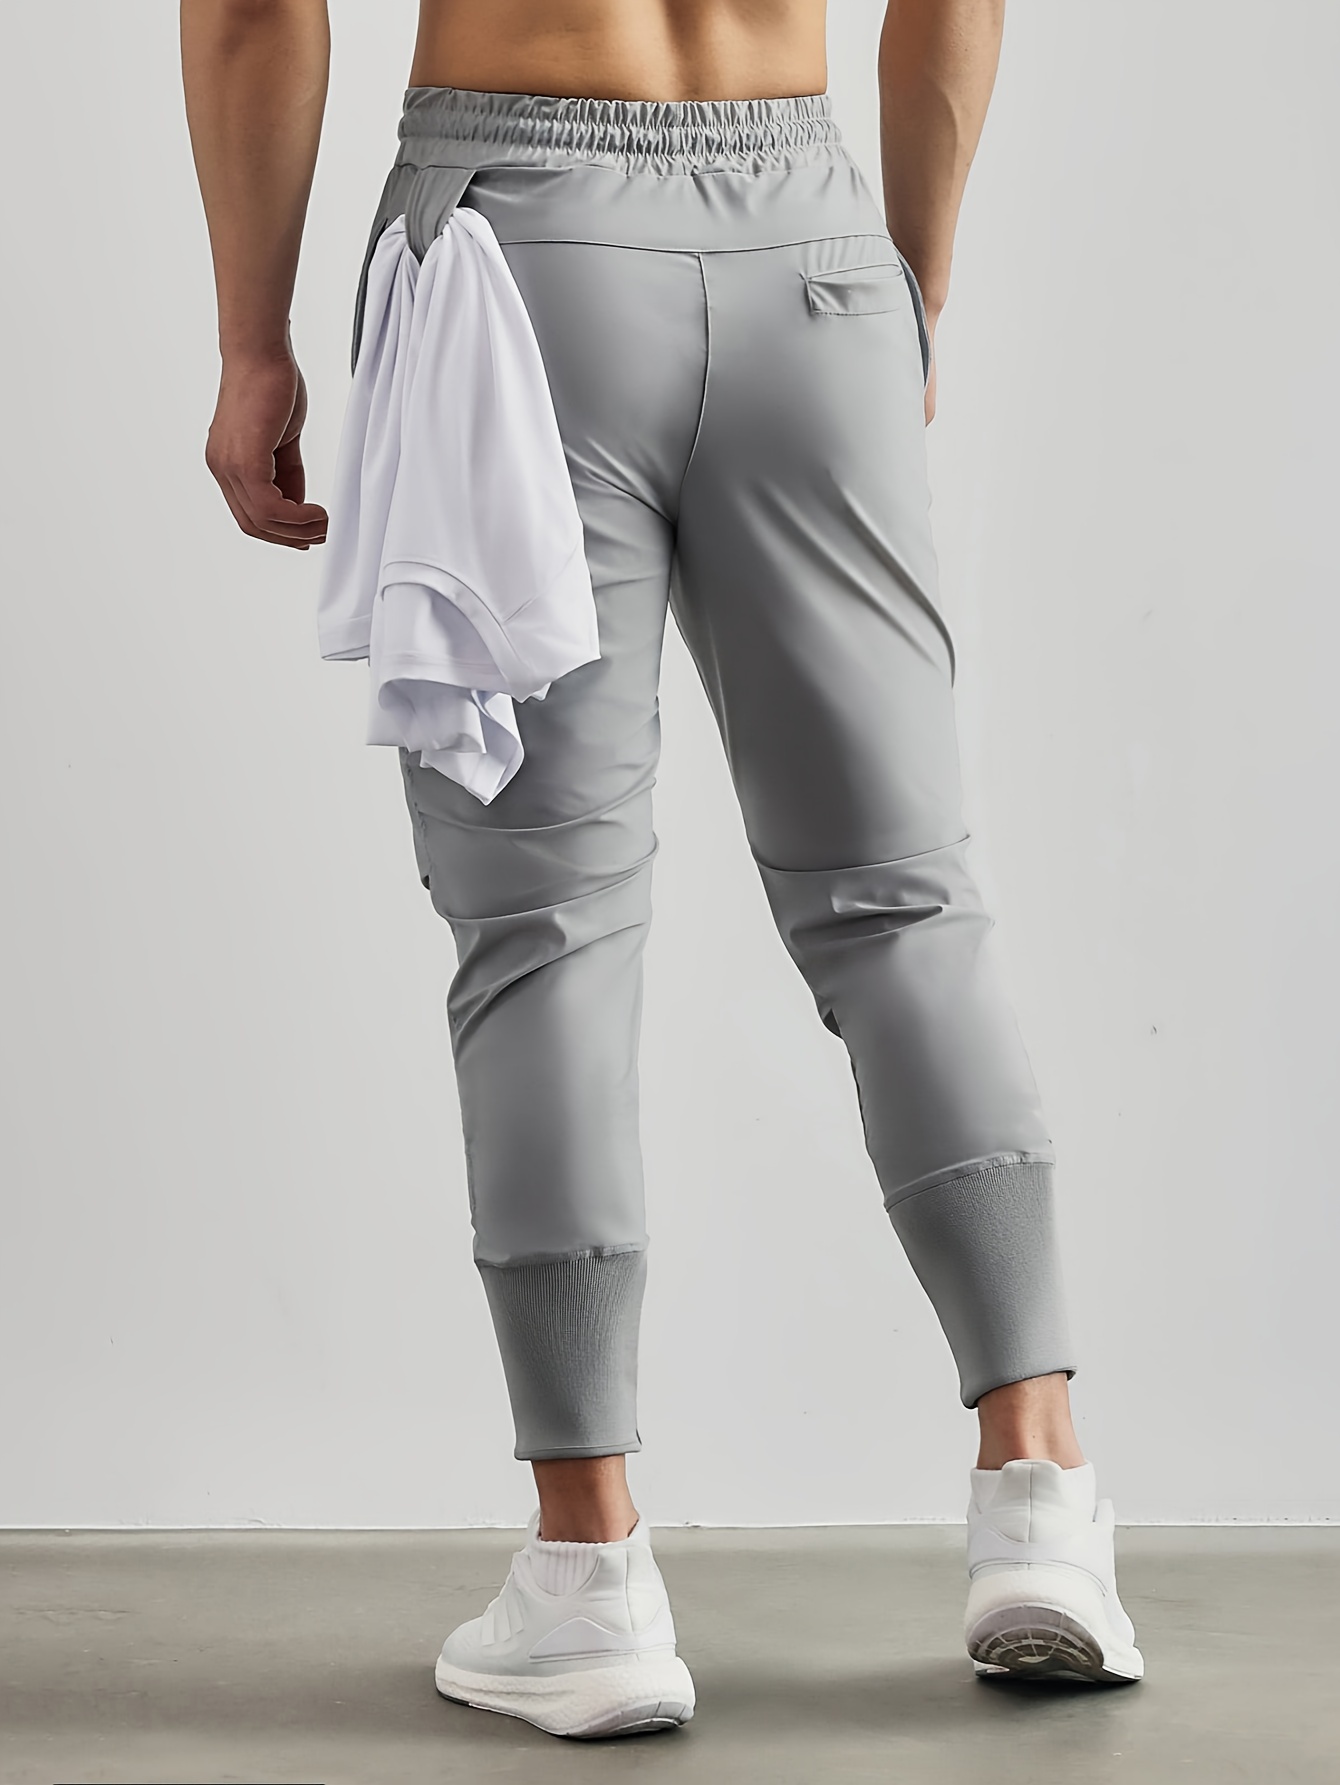 Men Low-rise Sport Sweat Pants Gym Athletic Slim Fit Lounge Trousers Casual  Pant